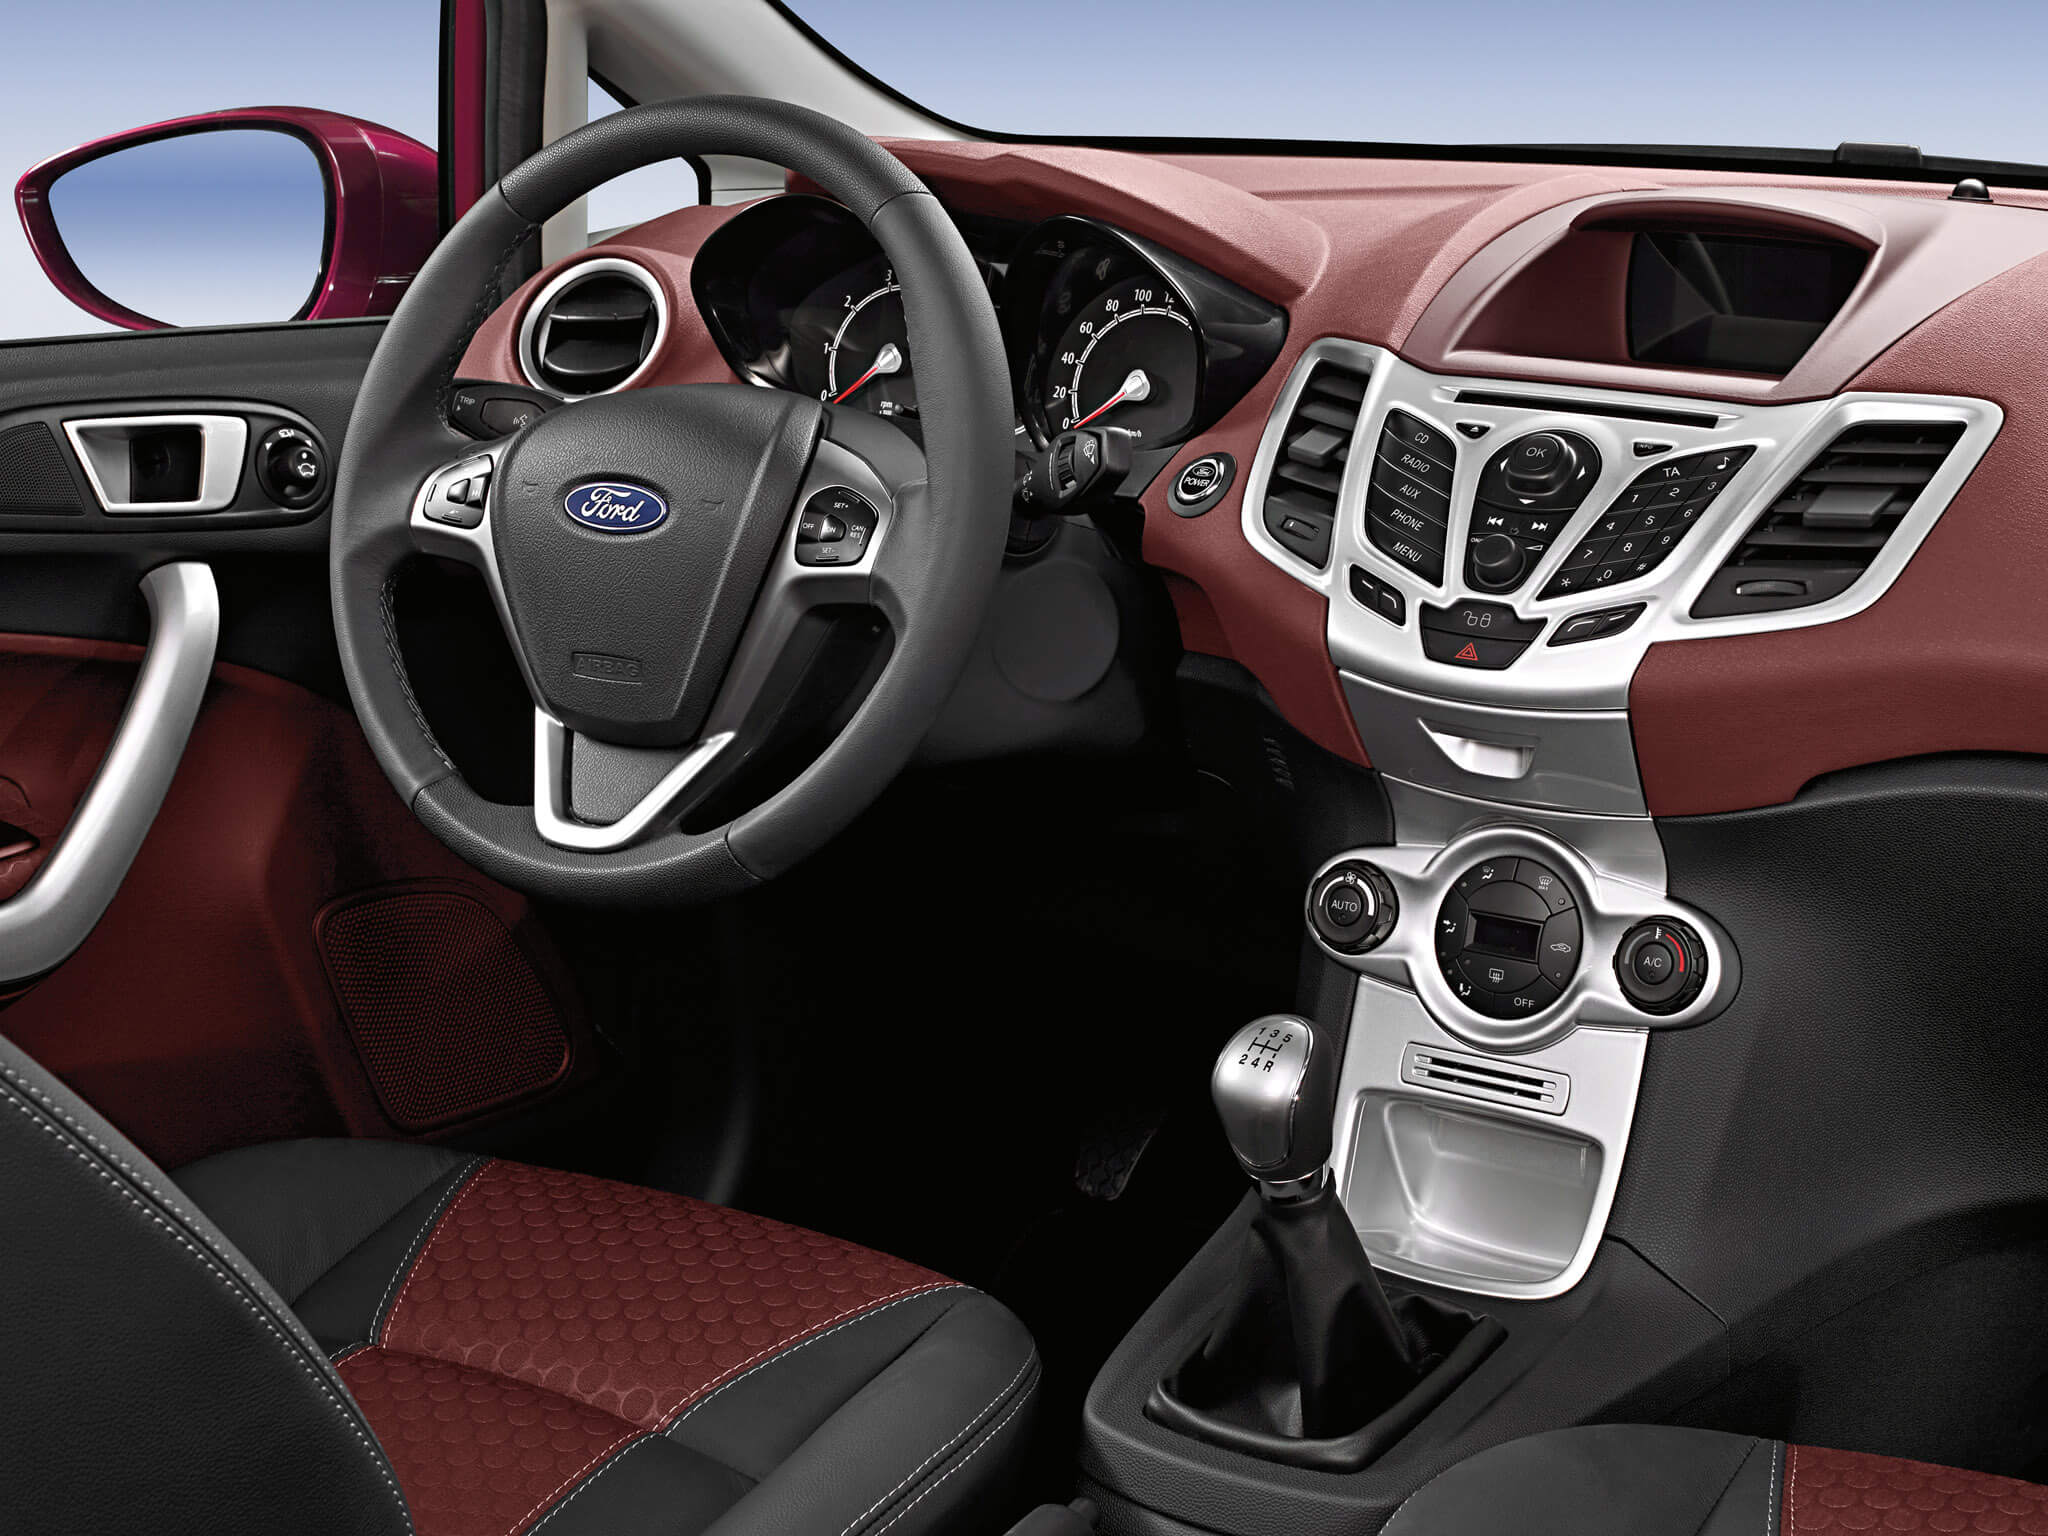 Ford Fiesta Mk7 interior